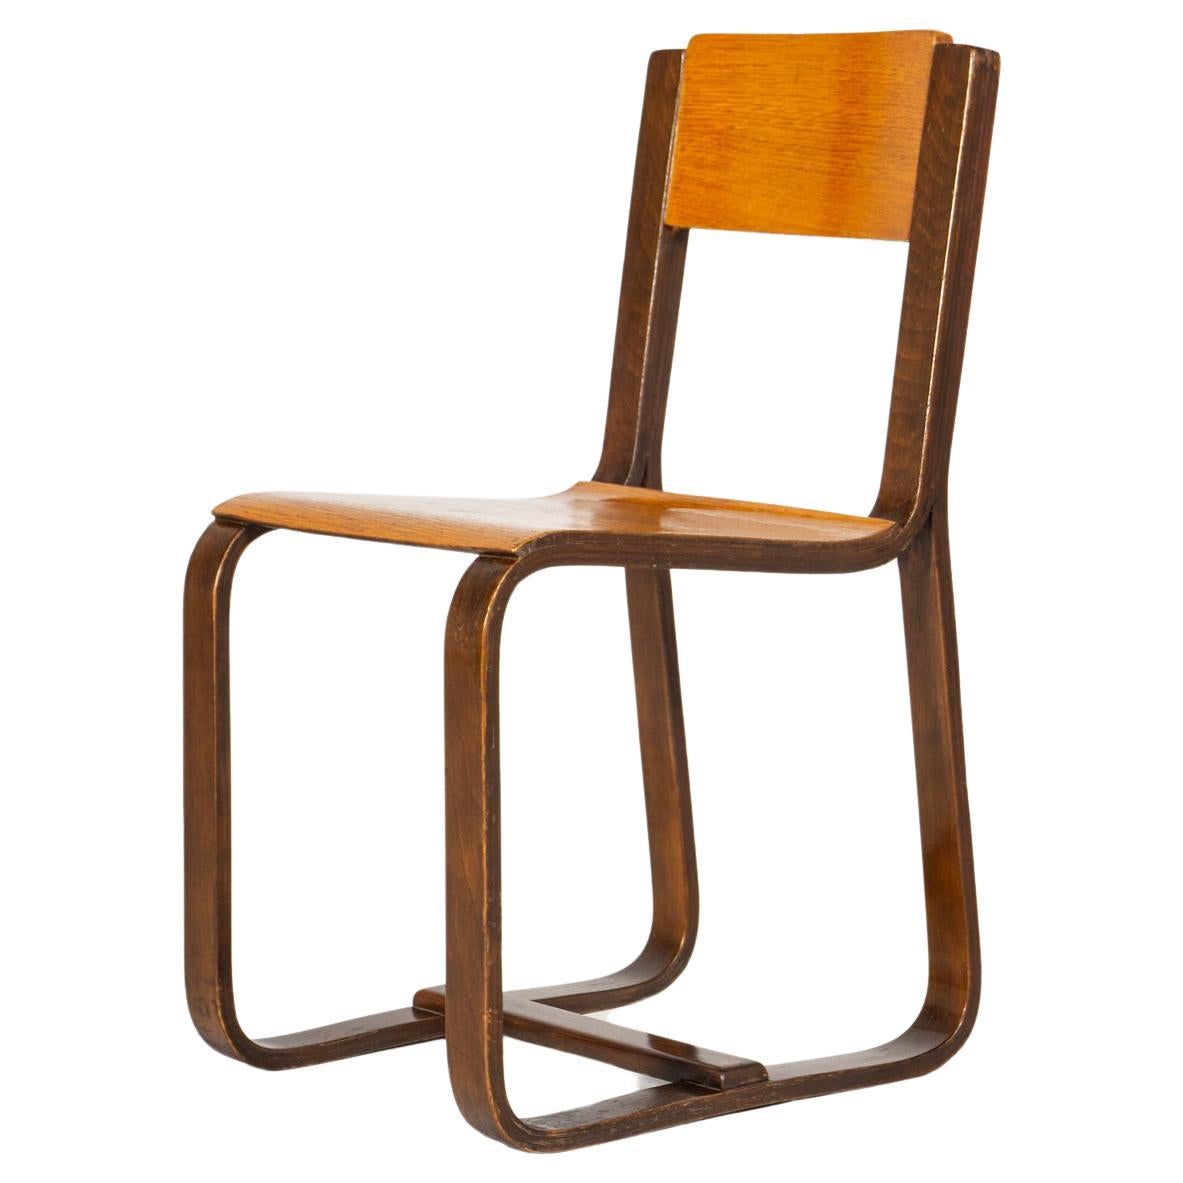 Chair by Giuseppe Pagano Pogatschnig,  1938